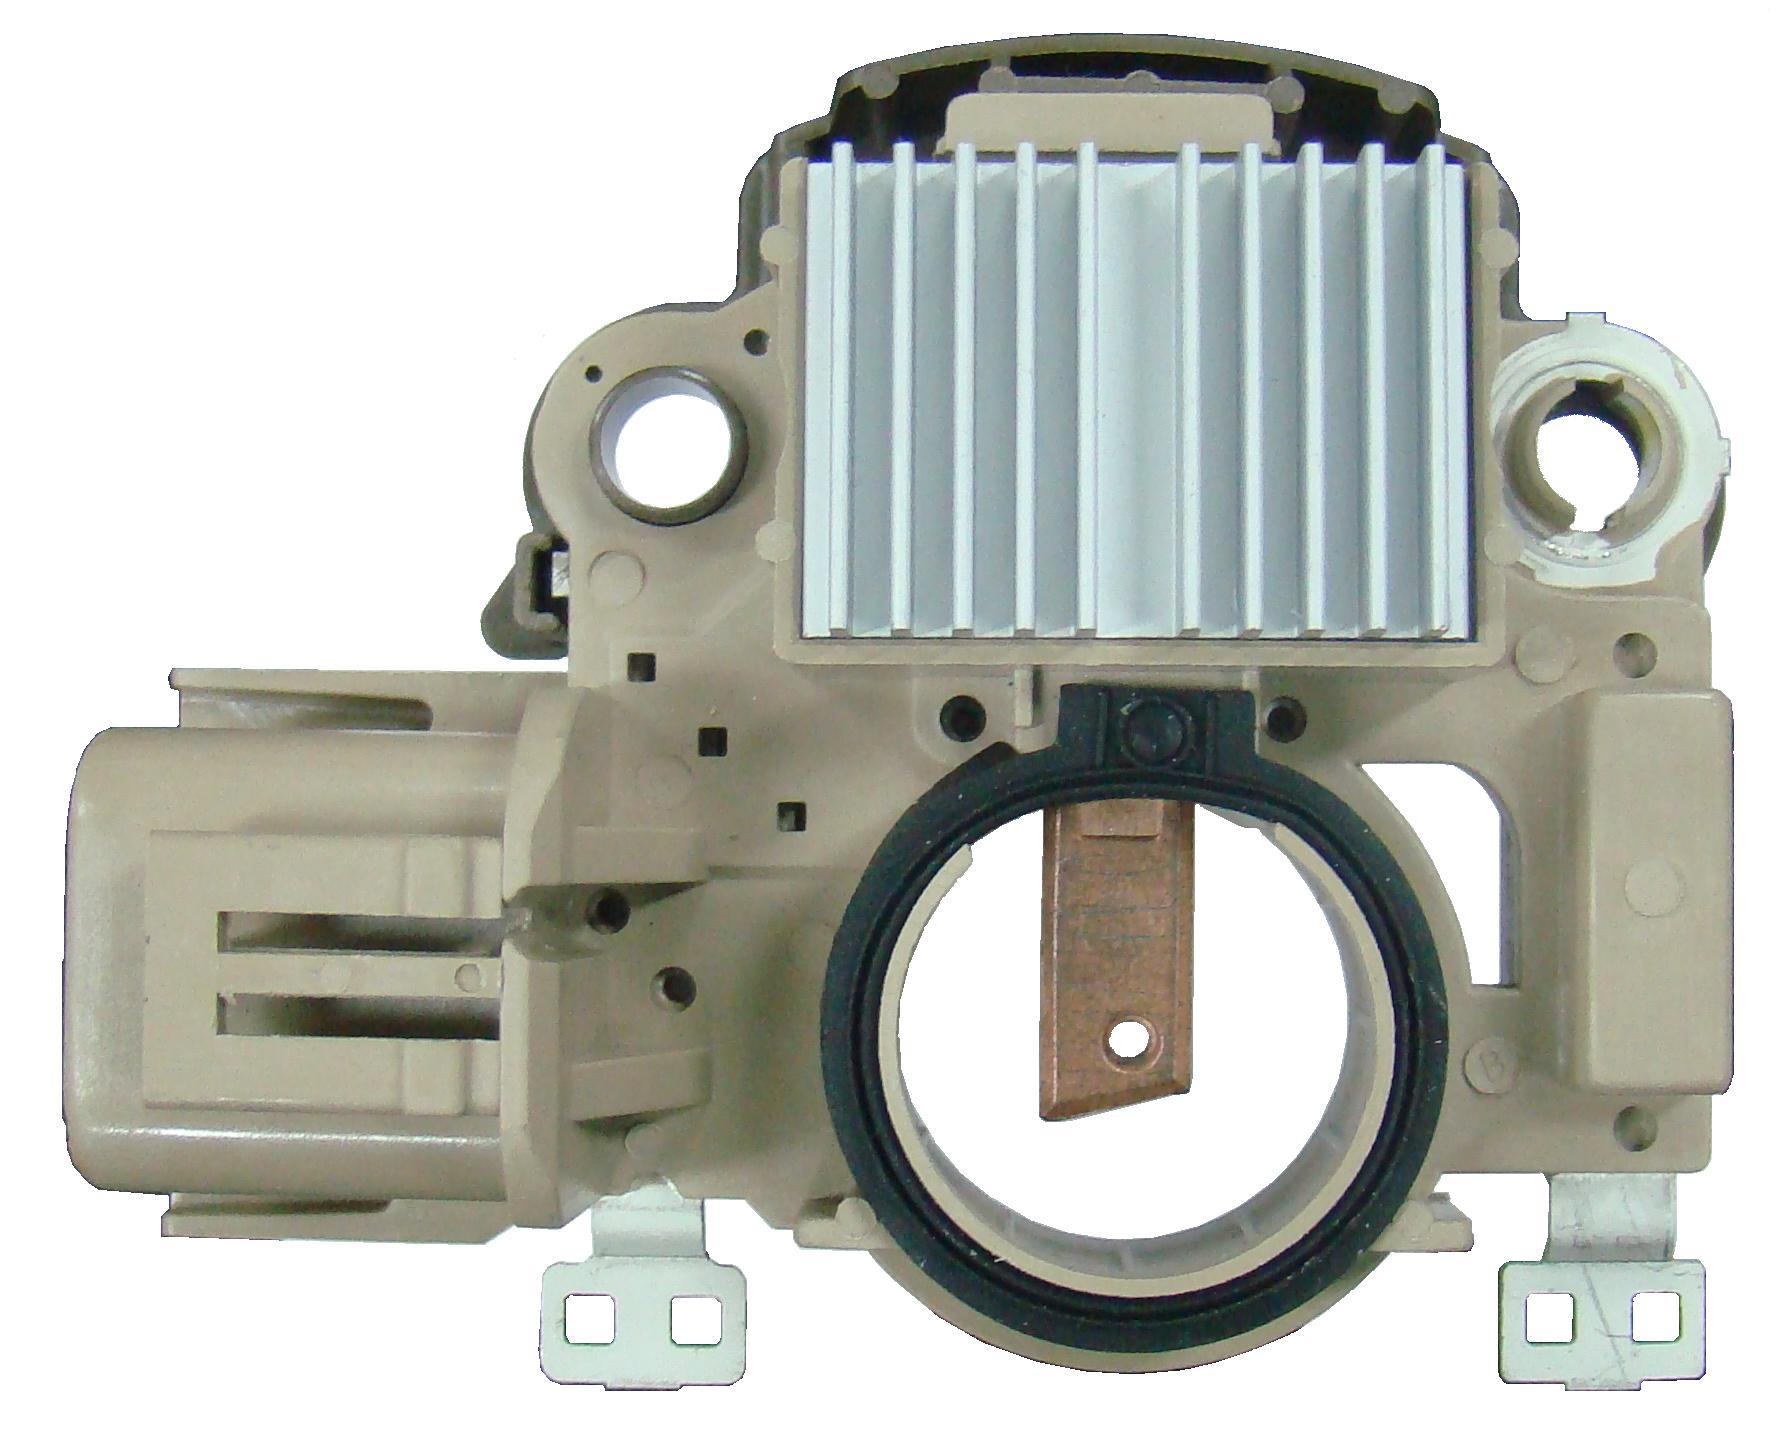 Voltage Regulator for Automobile(GNR-M16)